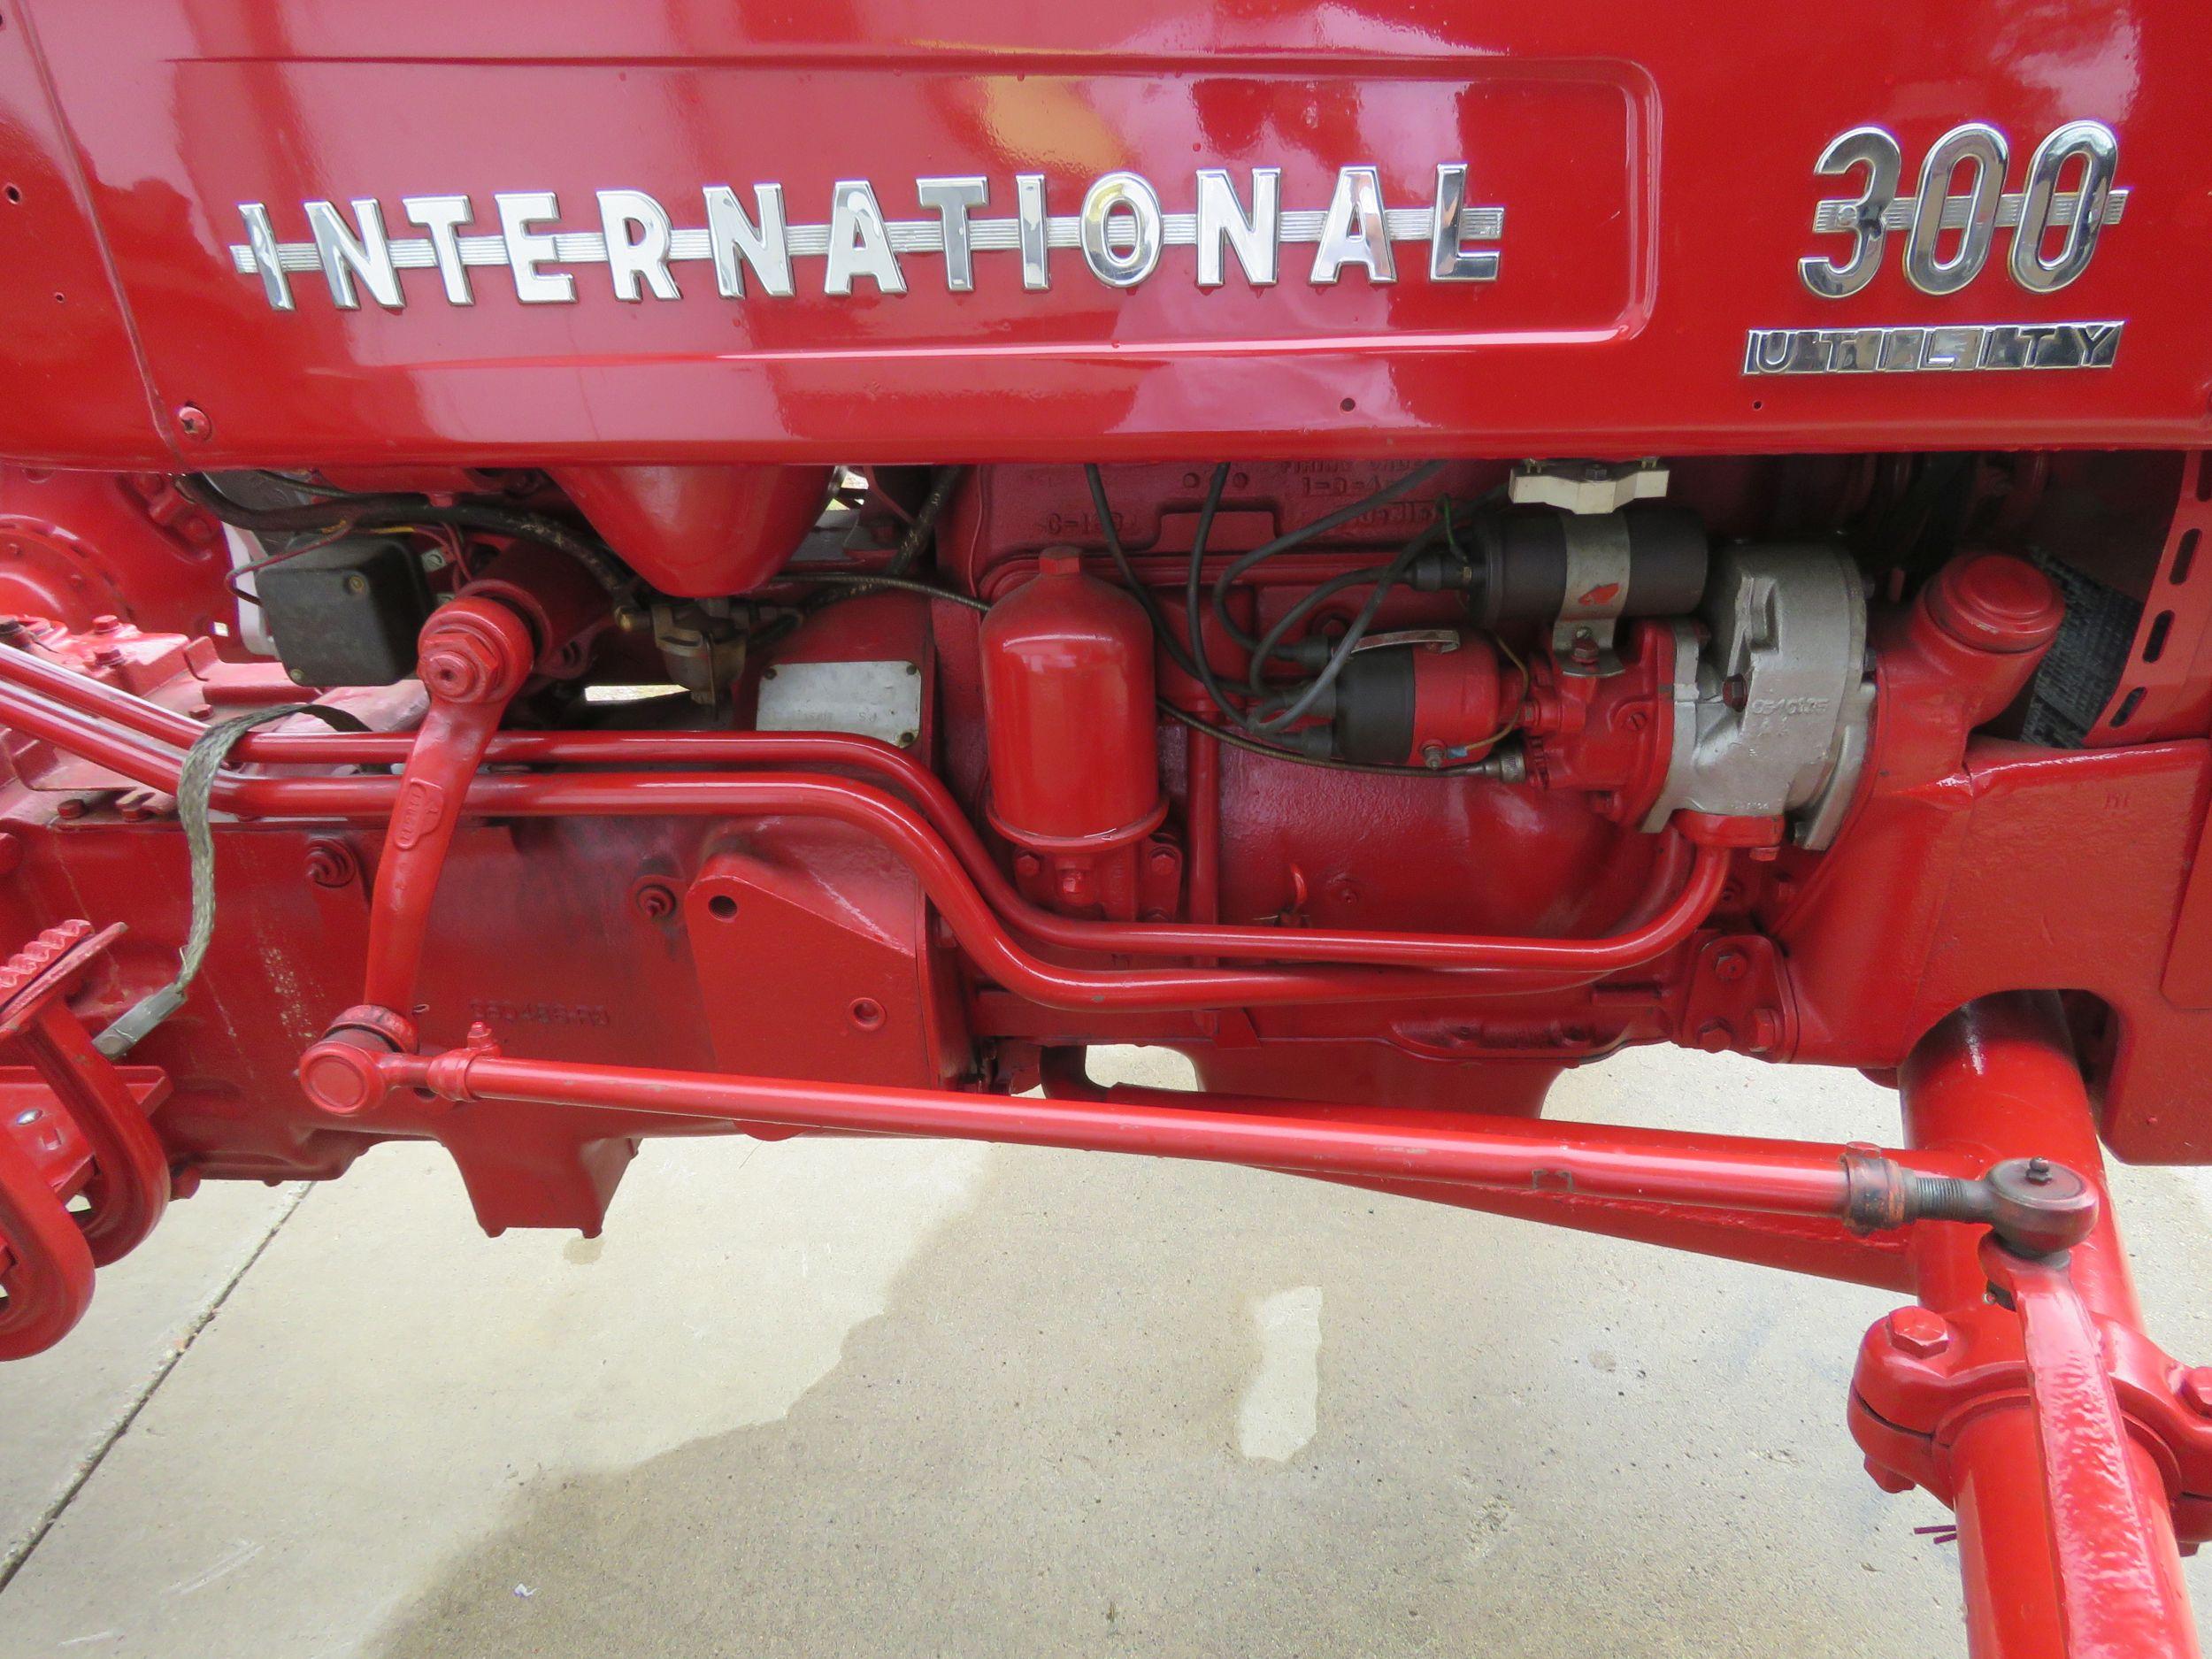 1955 Internattional 300 Utility Tractor